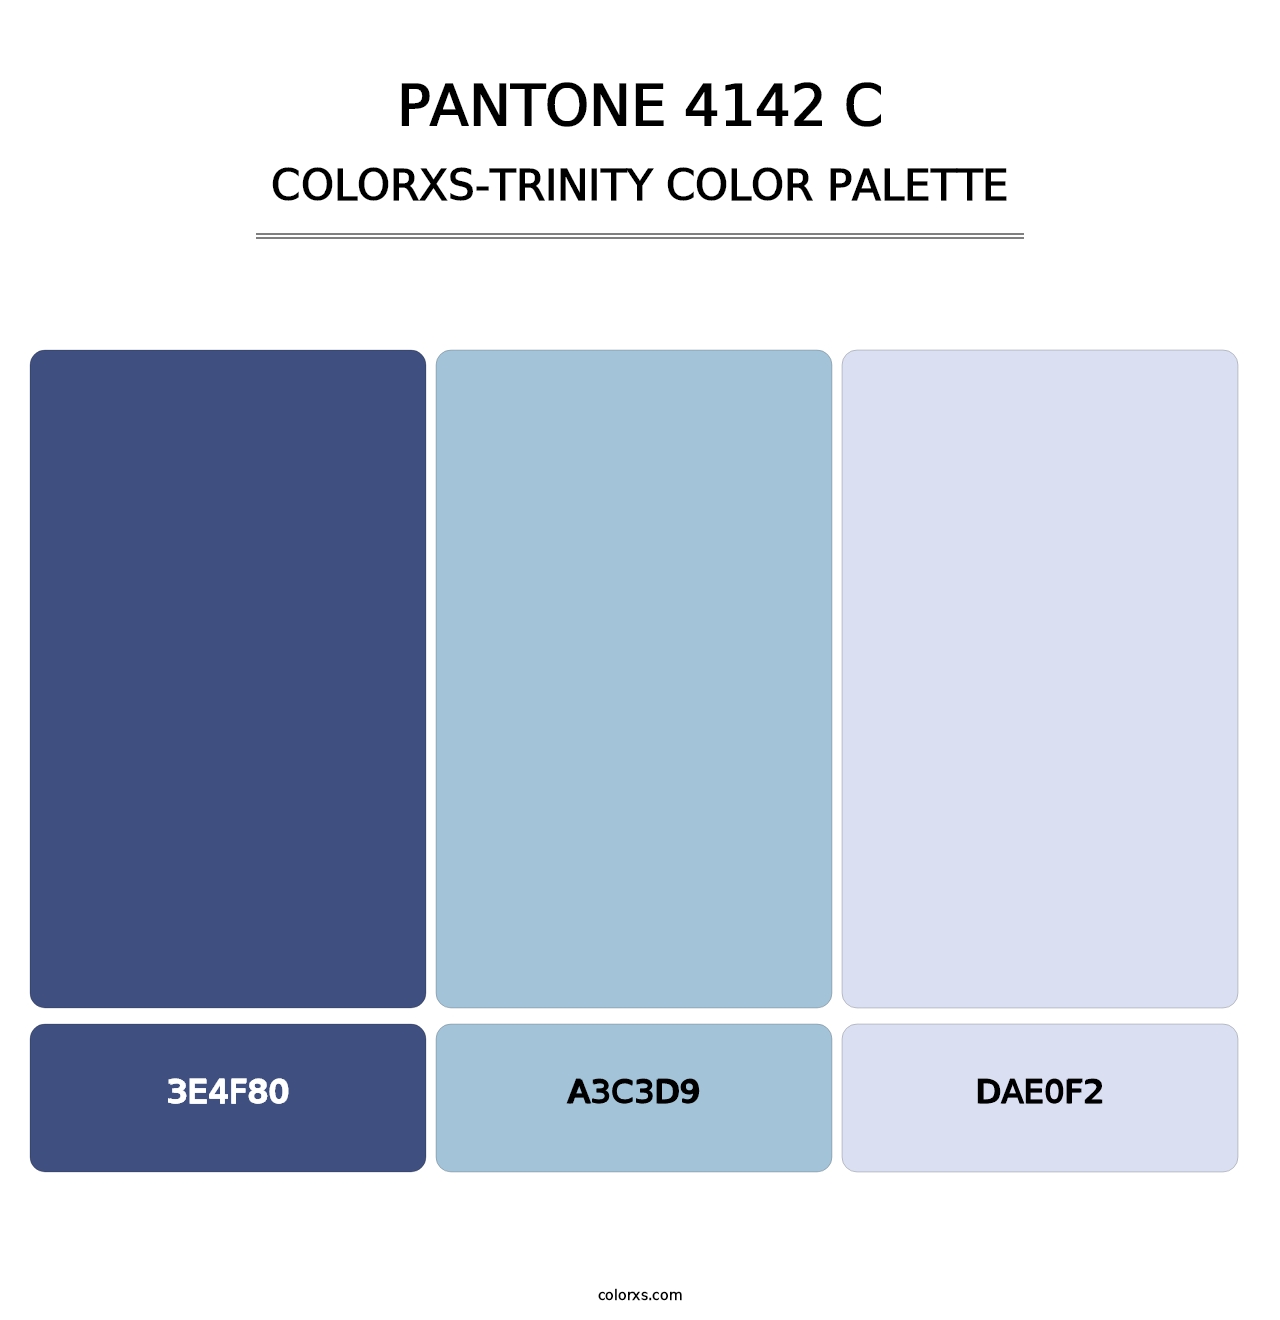 PANTONE 4142 C - Colorxs Trinity Palette